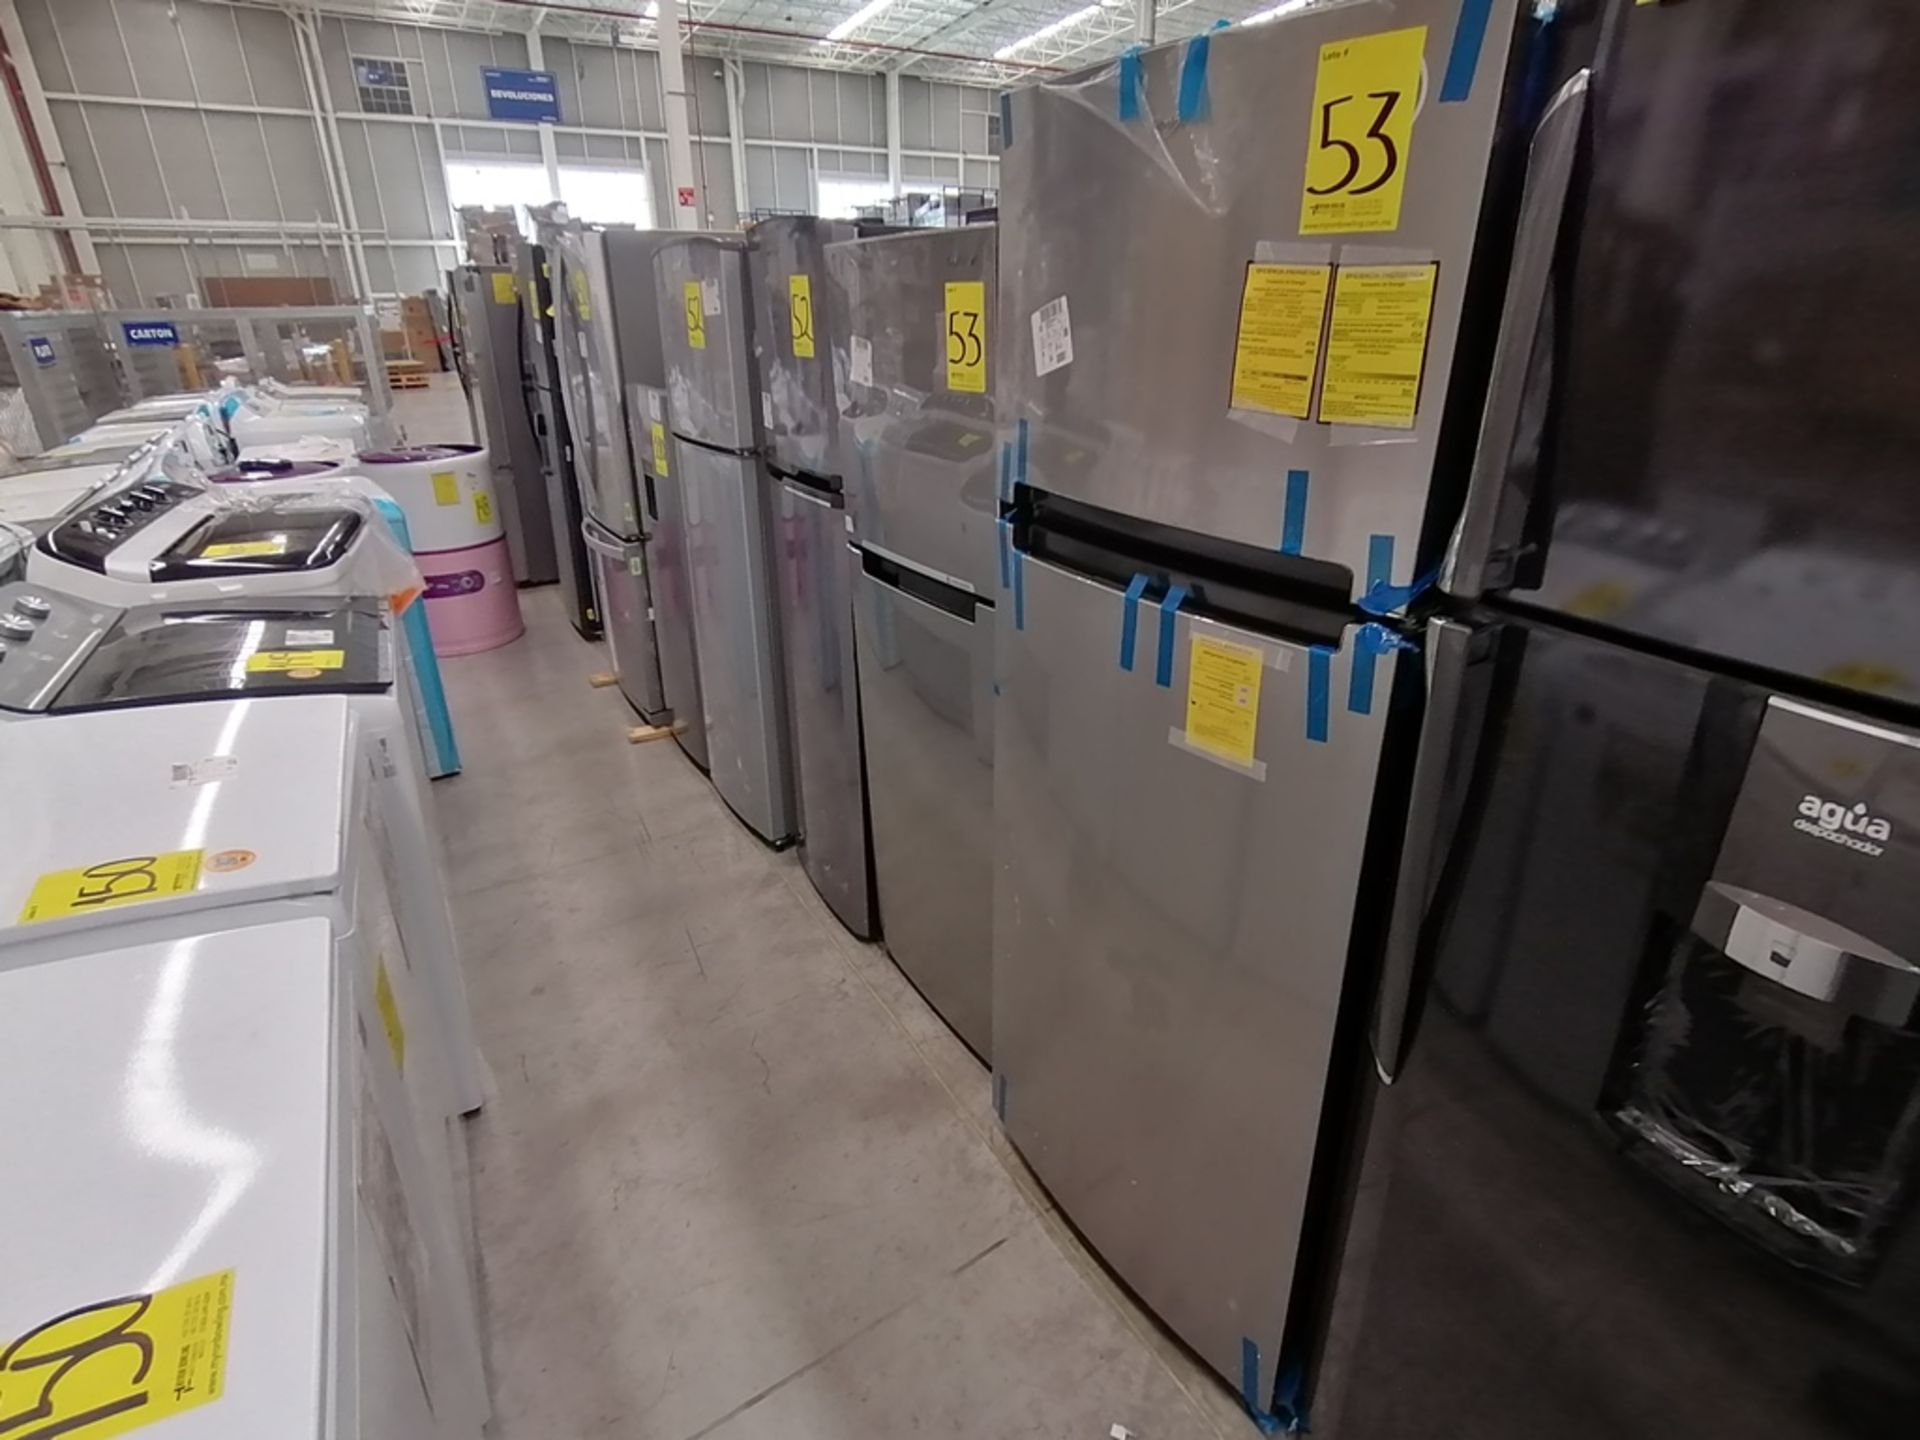 Lote de 2 refrigeradores incluye: 1 Refrigerador, Marca Samsung, Modelo RT29K500JS8, Serie 0AZS4BAR - Image 8 of 15